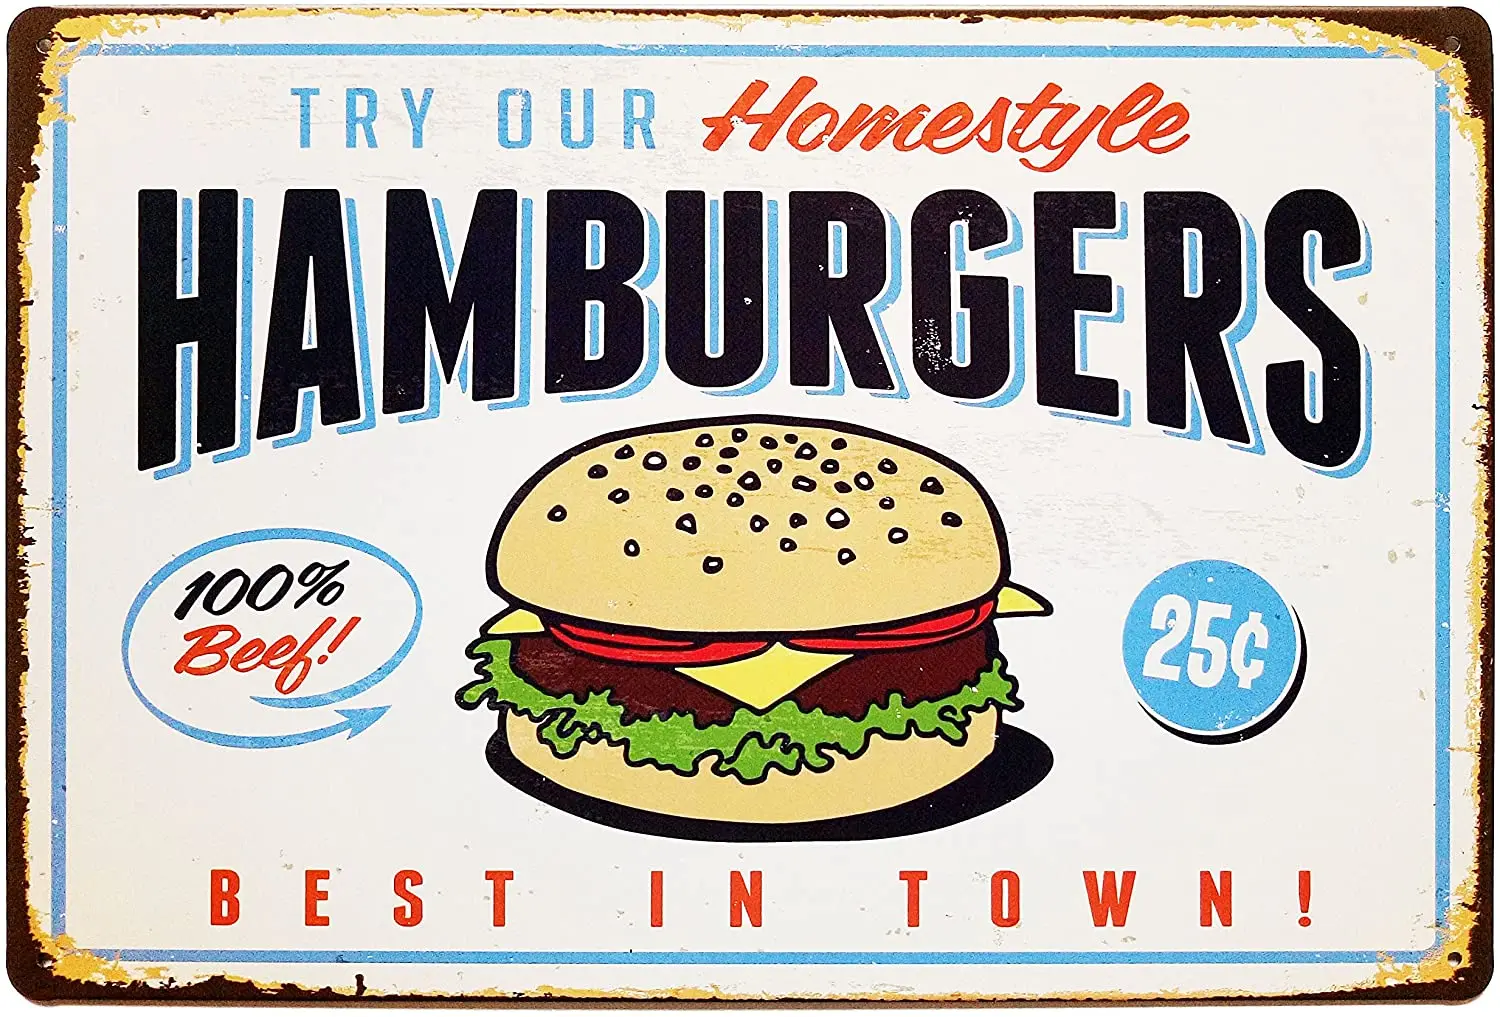 

Best in Town Hamburgers Retro Metal Vintage Tin Signs Bar Wall Decor 12 X 8